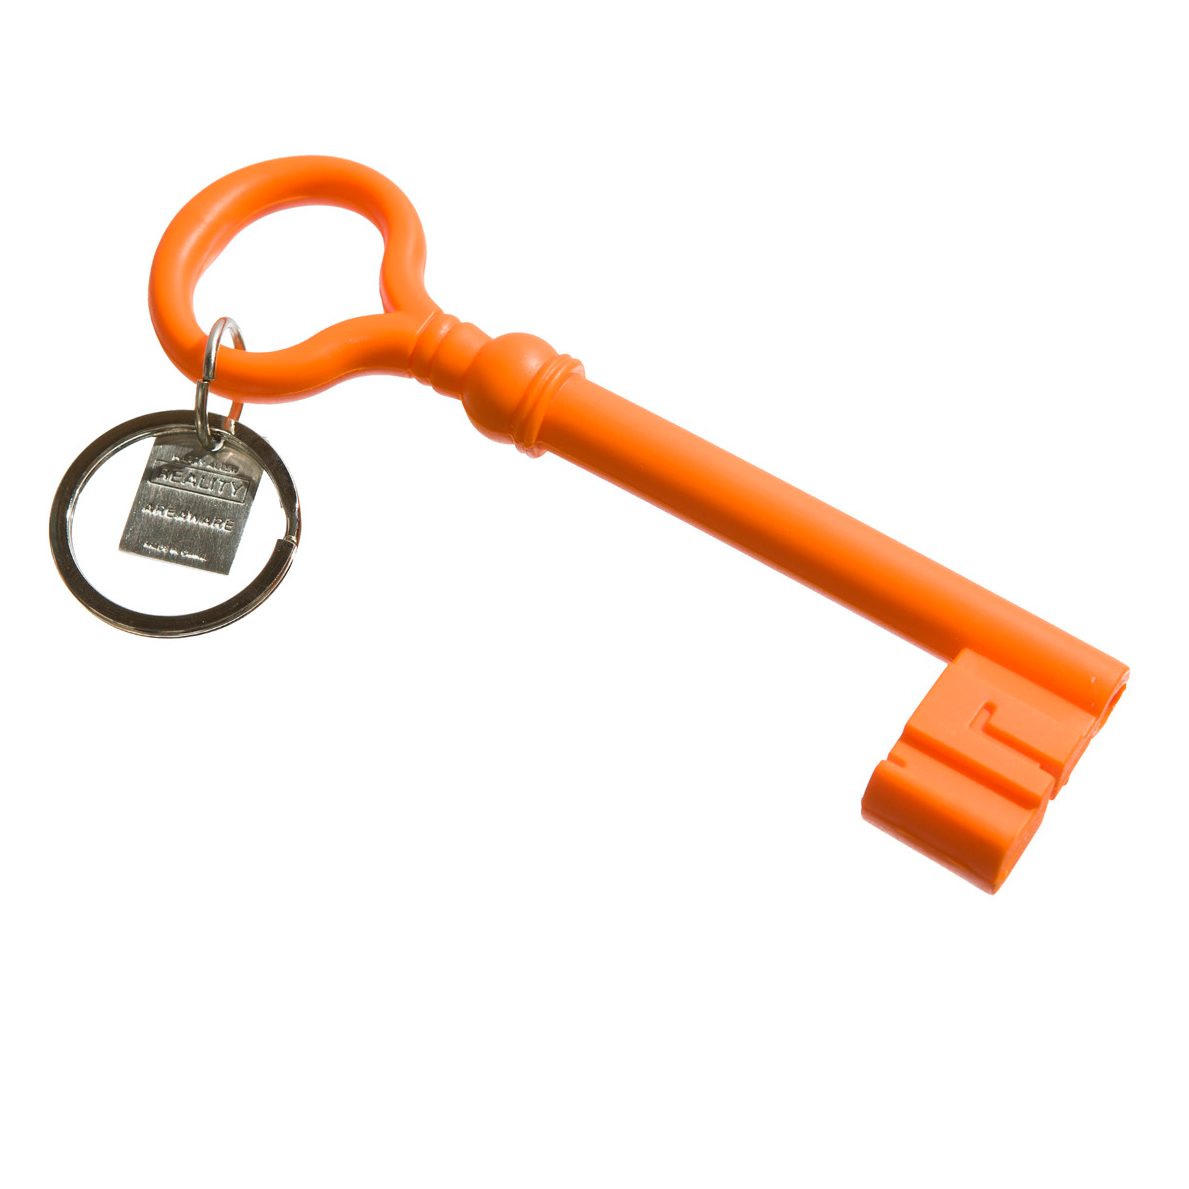 Areaware - Harry Allen - keychain key